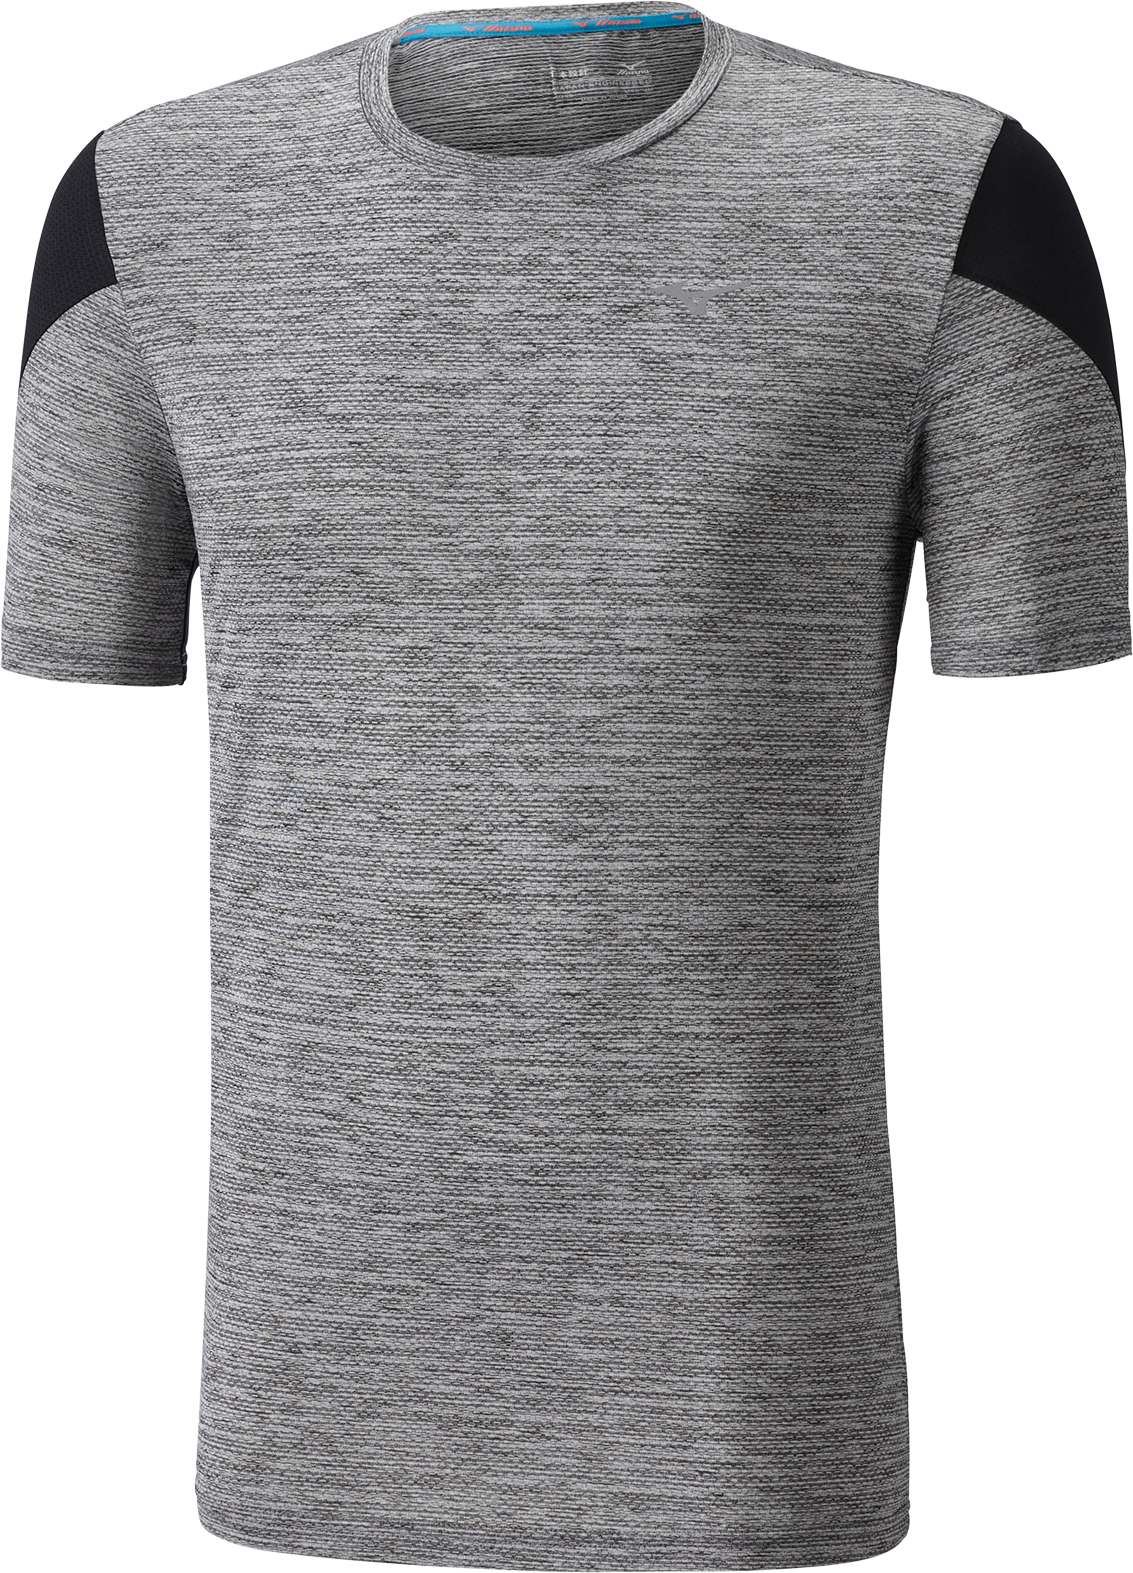 Men’s short sleeve running T-shirt